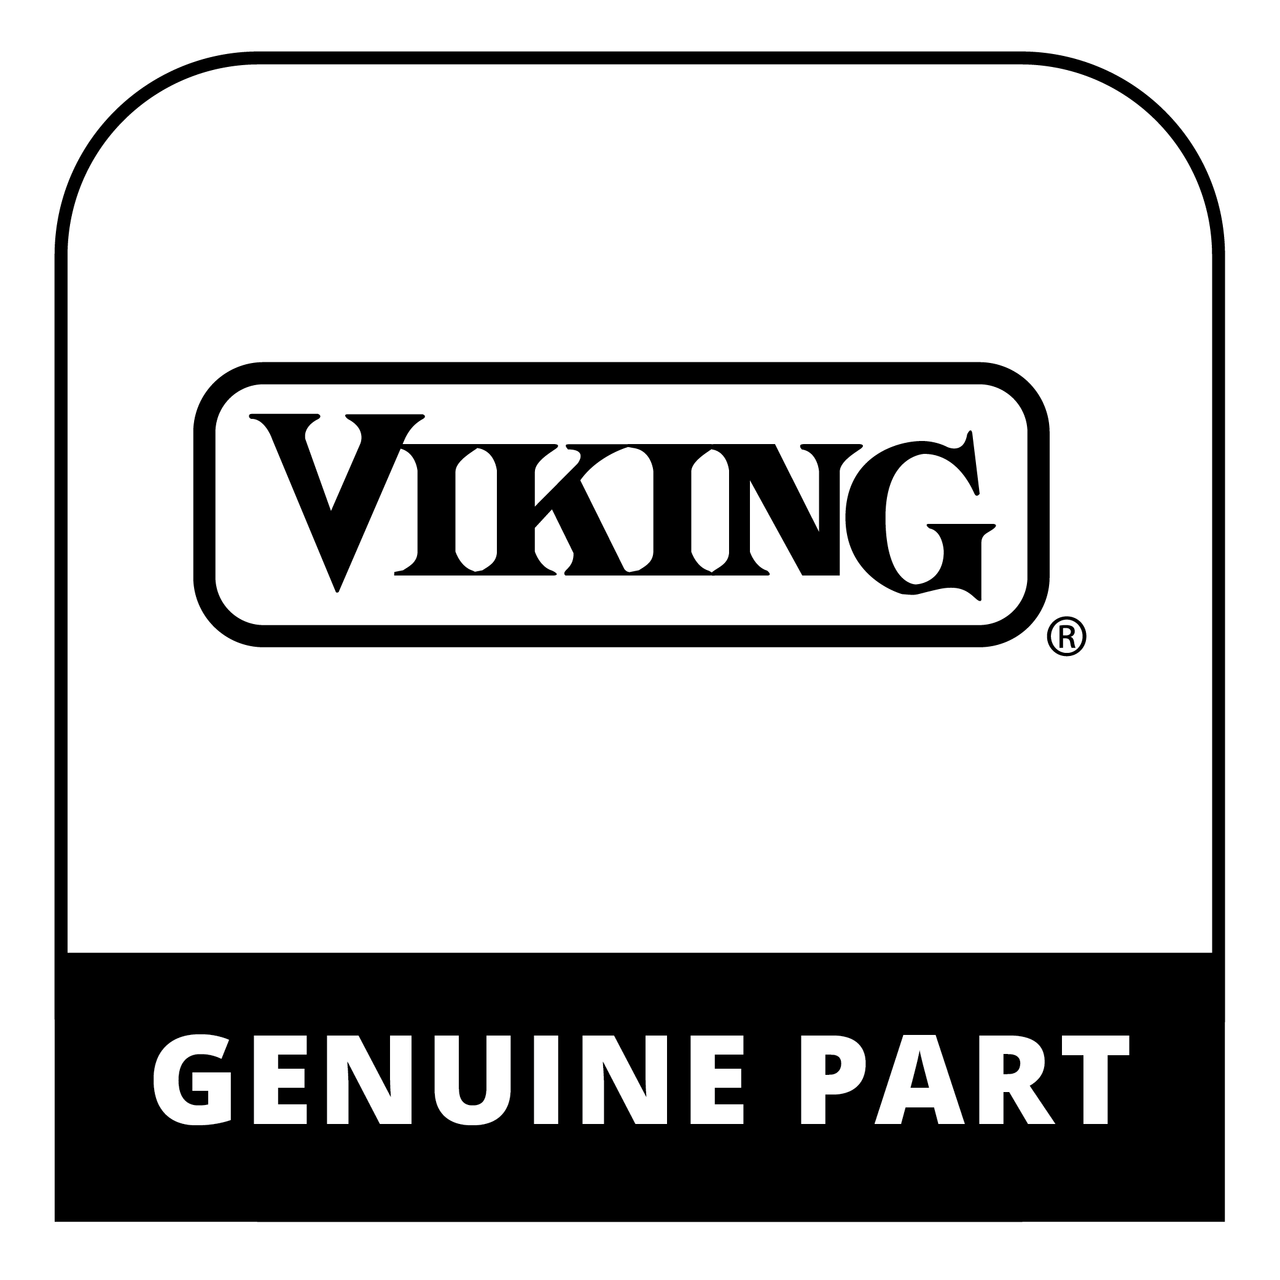 Viking 057037-6797 - Pnl, Door, Oven, Lrg- Alluvial Blue (Ab) - Genuine Viking Part